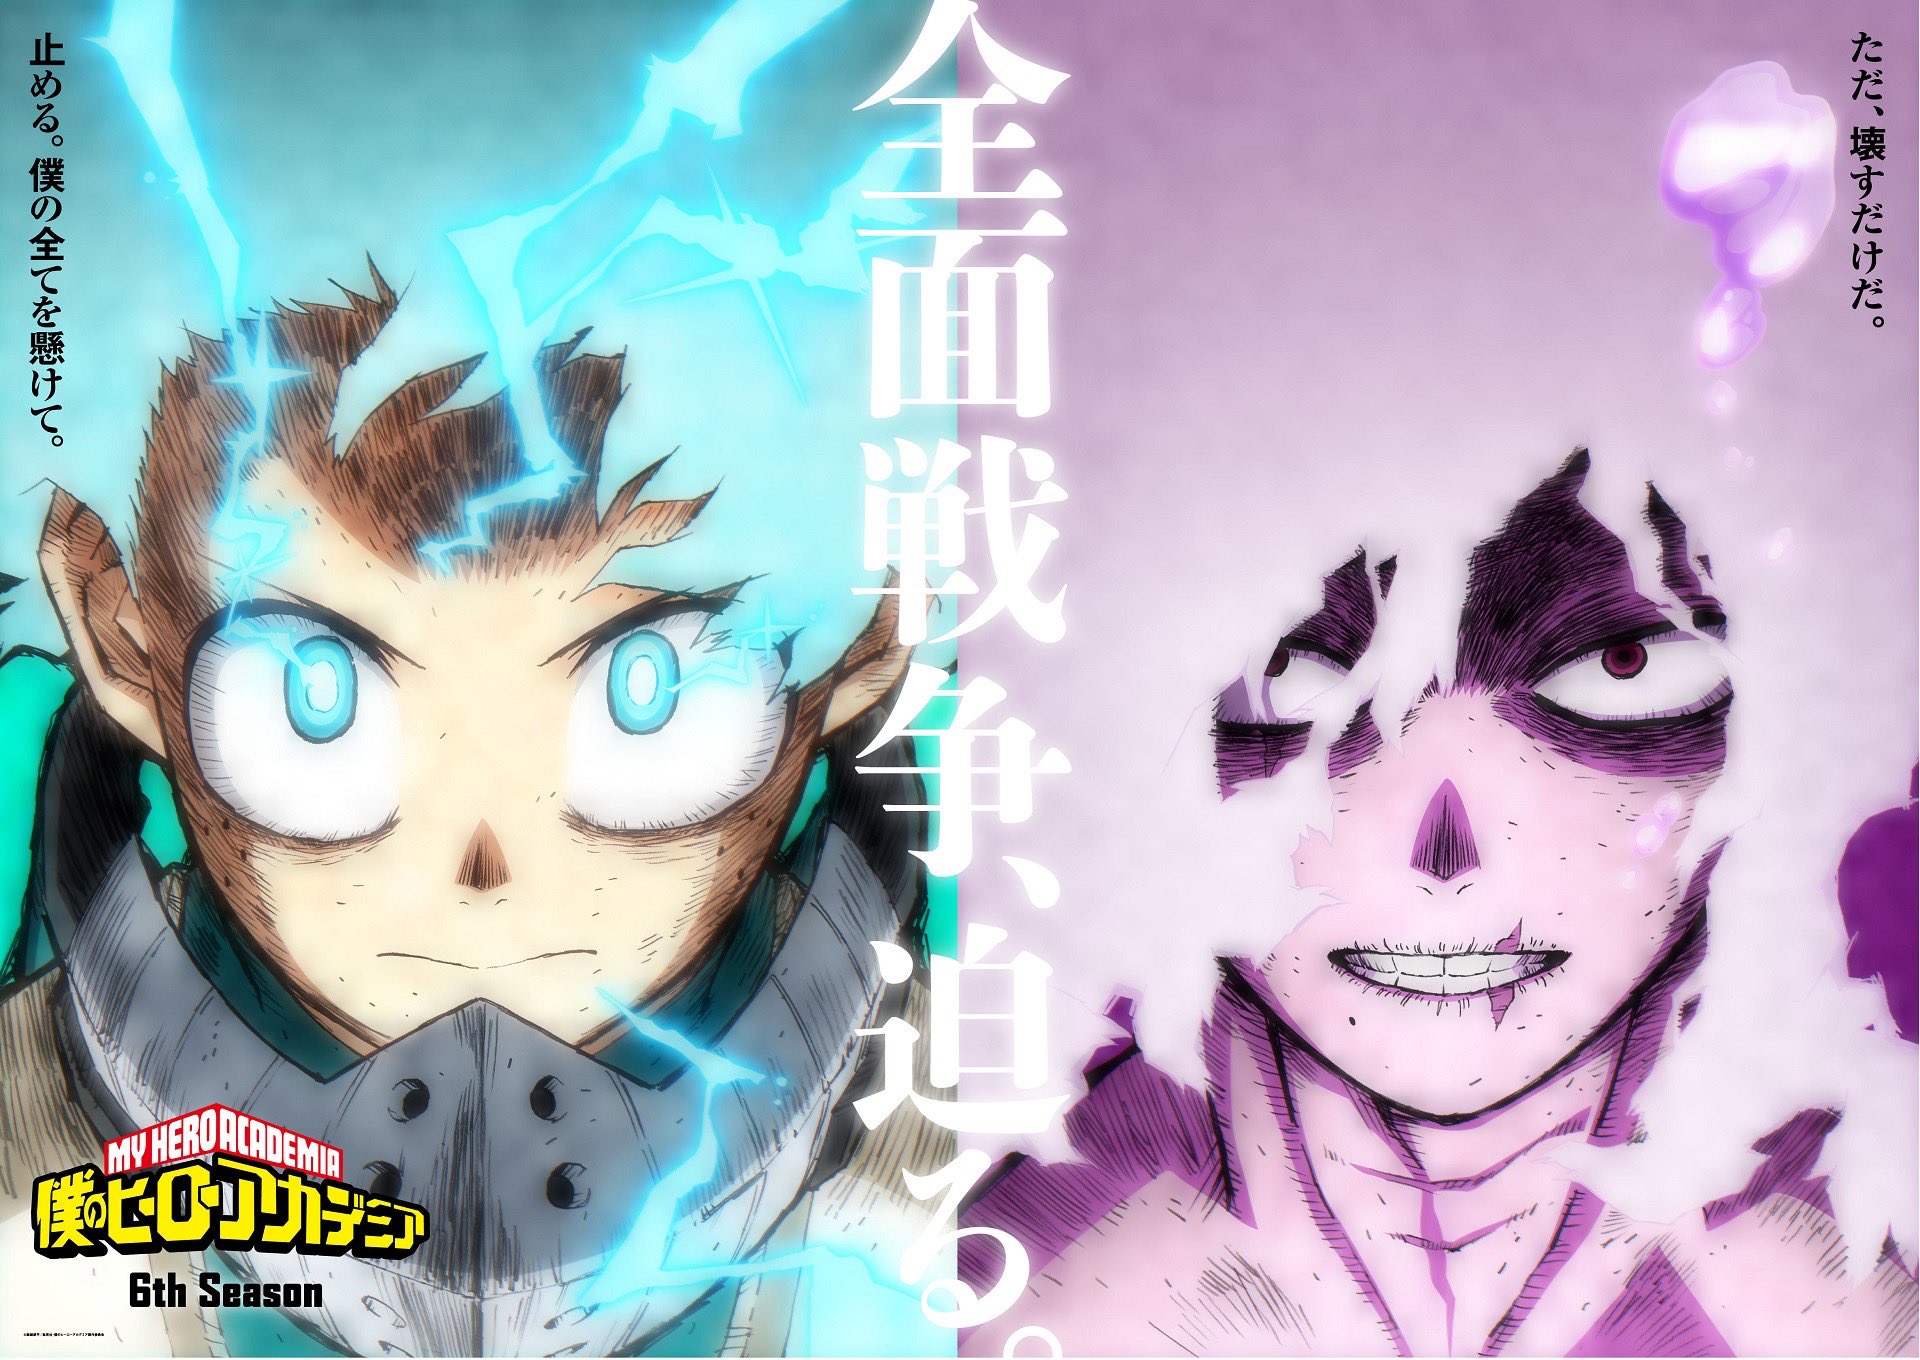 Shigaraki Powers Up in New My Hero Academia Season 6 TV Anime Character  Visual - Crunchyroll News